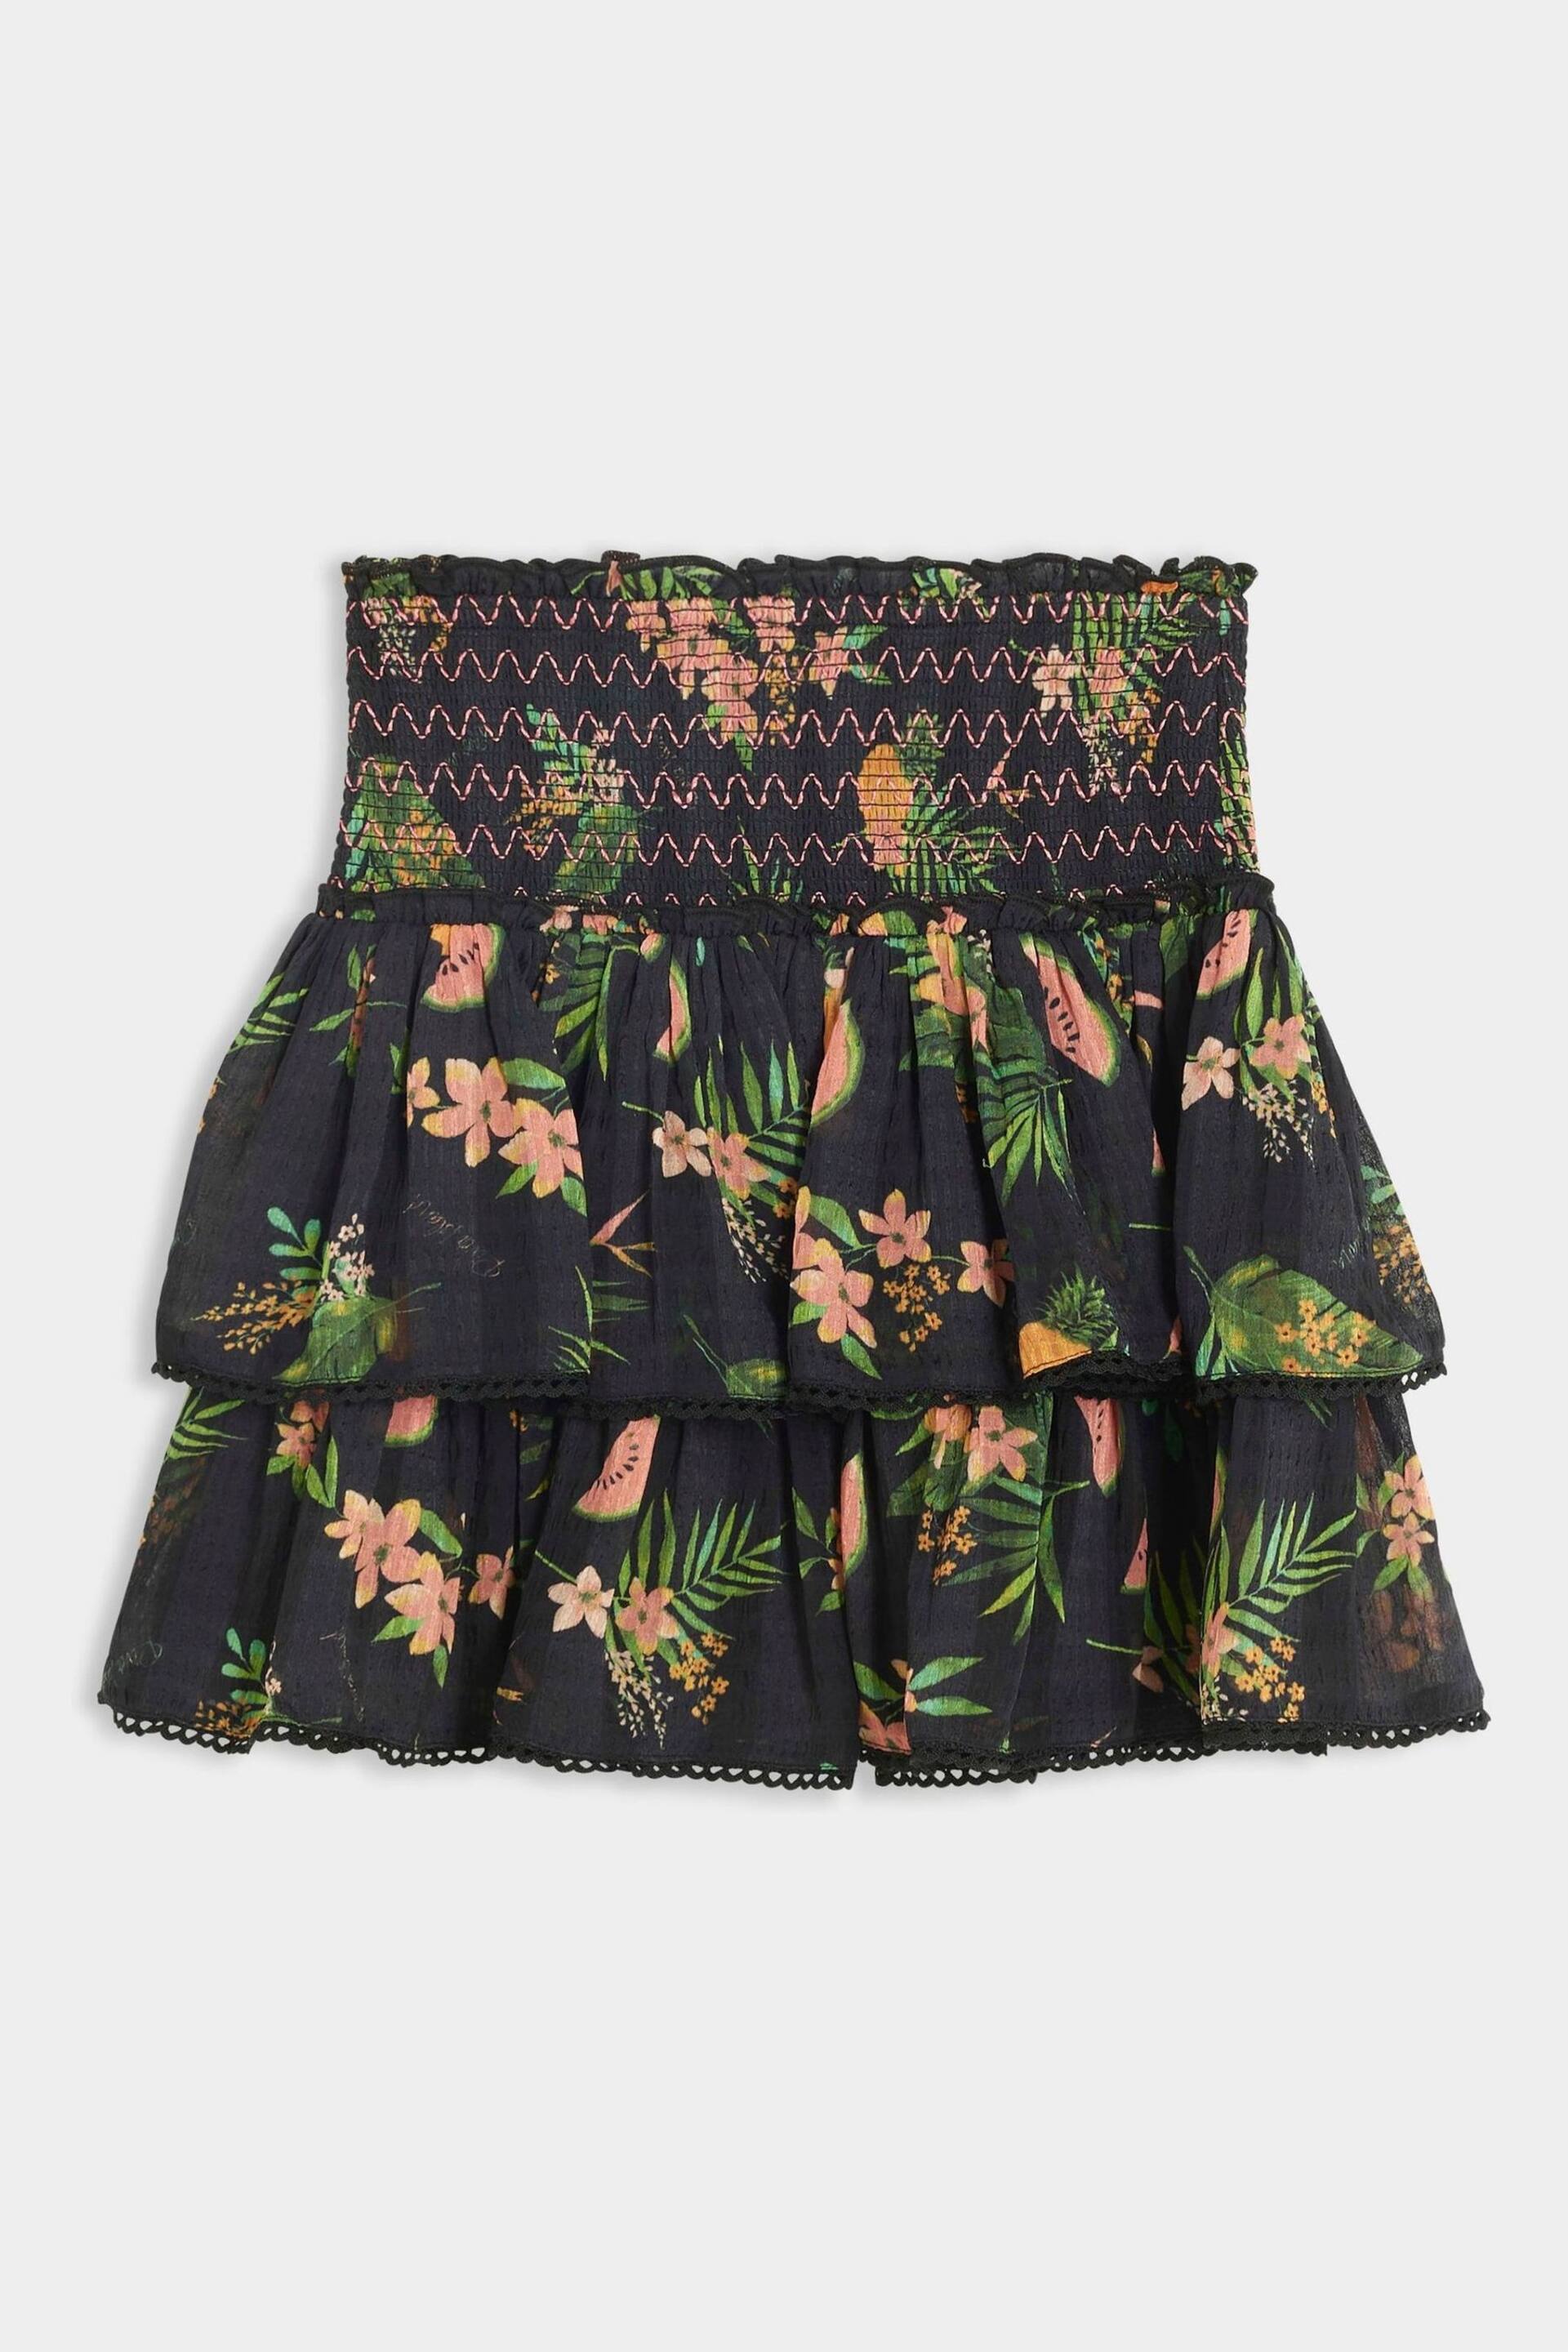 River Island Black Girls Tropical Rara Skirt - Image 1 of 4